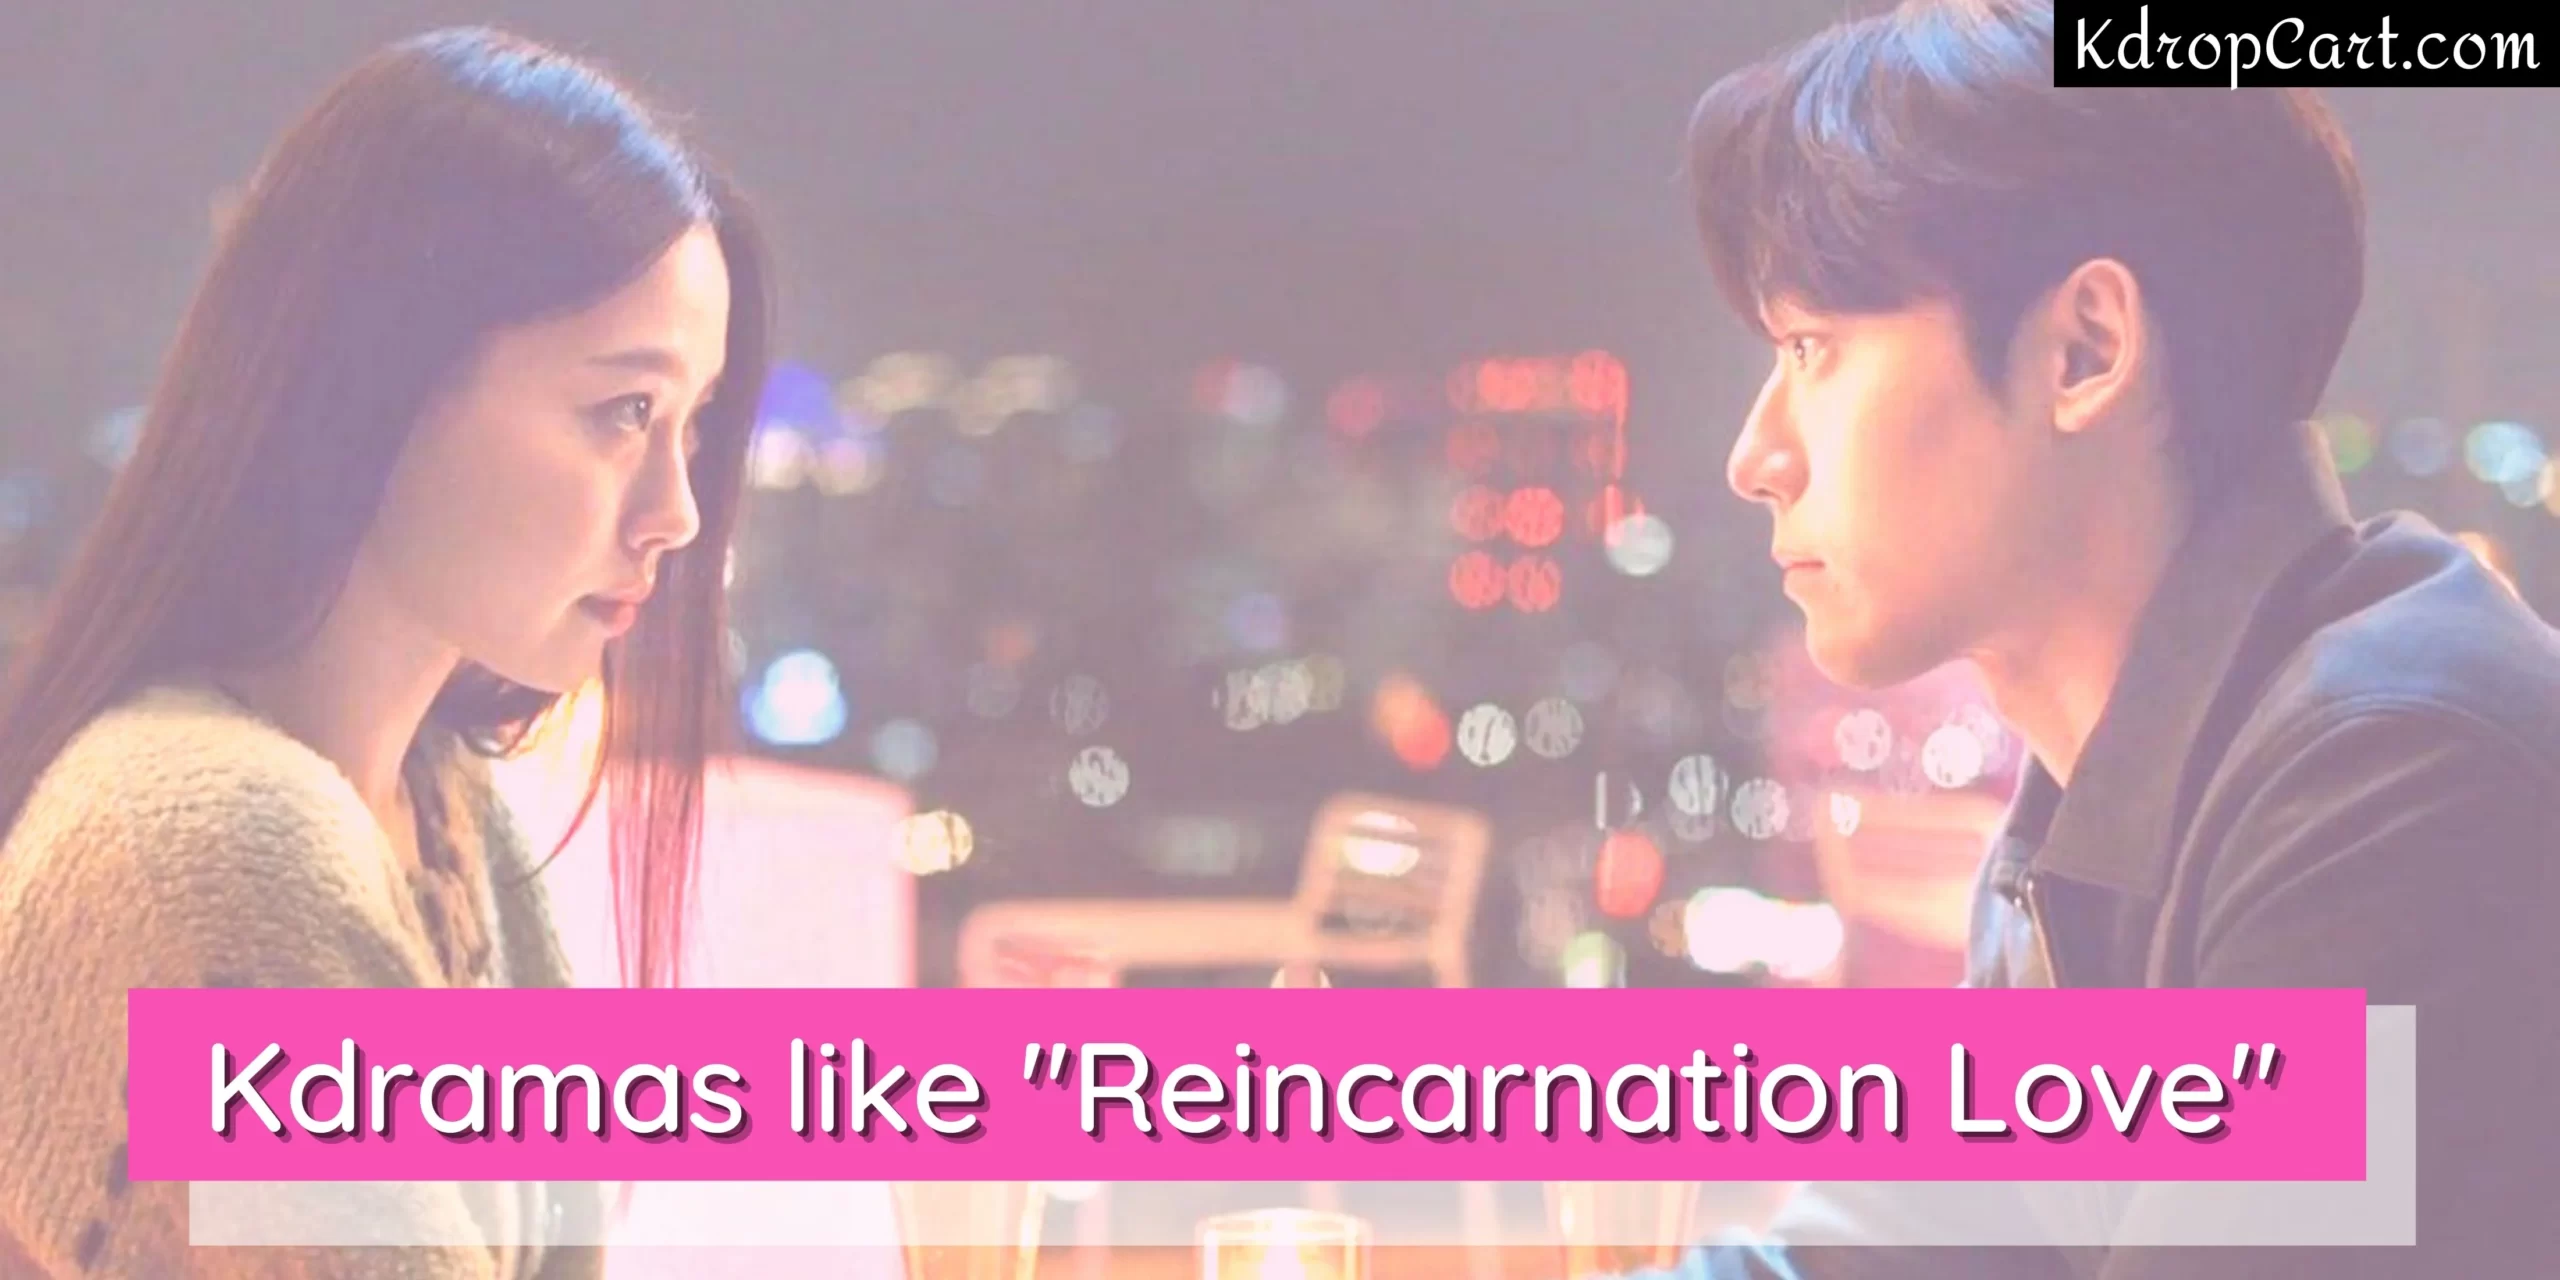 reincarnation love kdrama